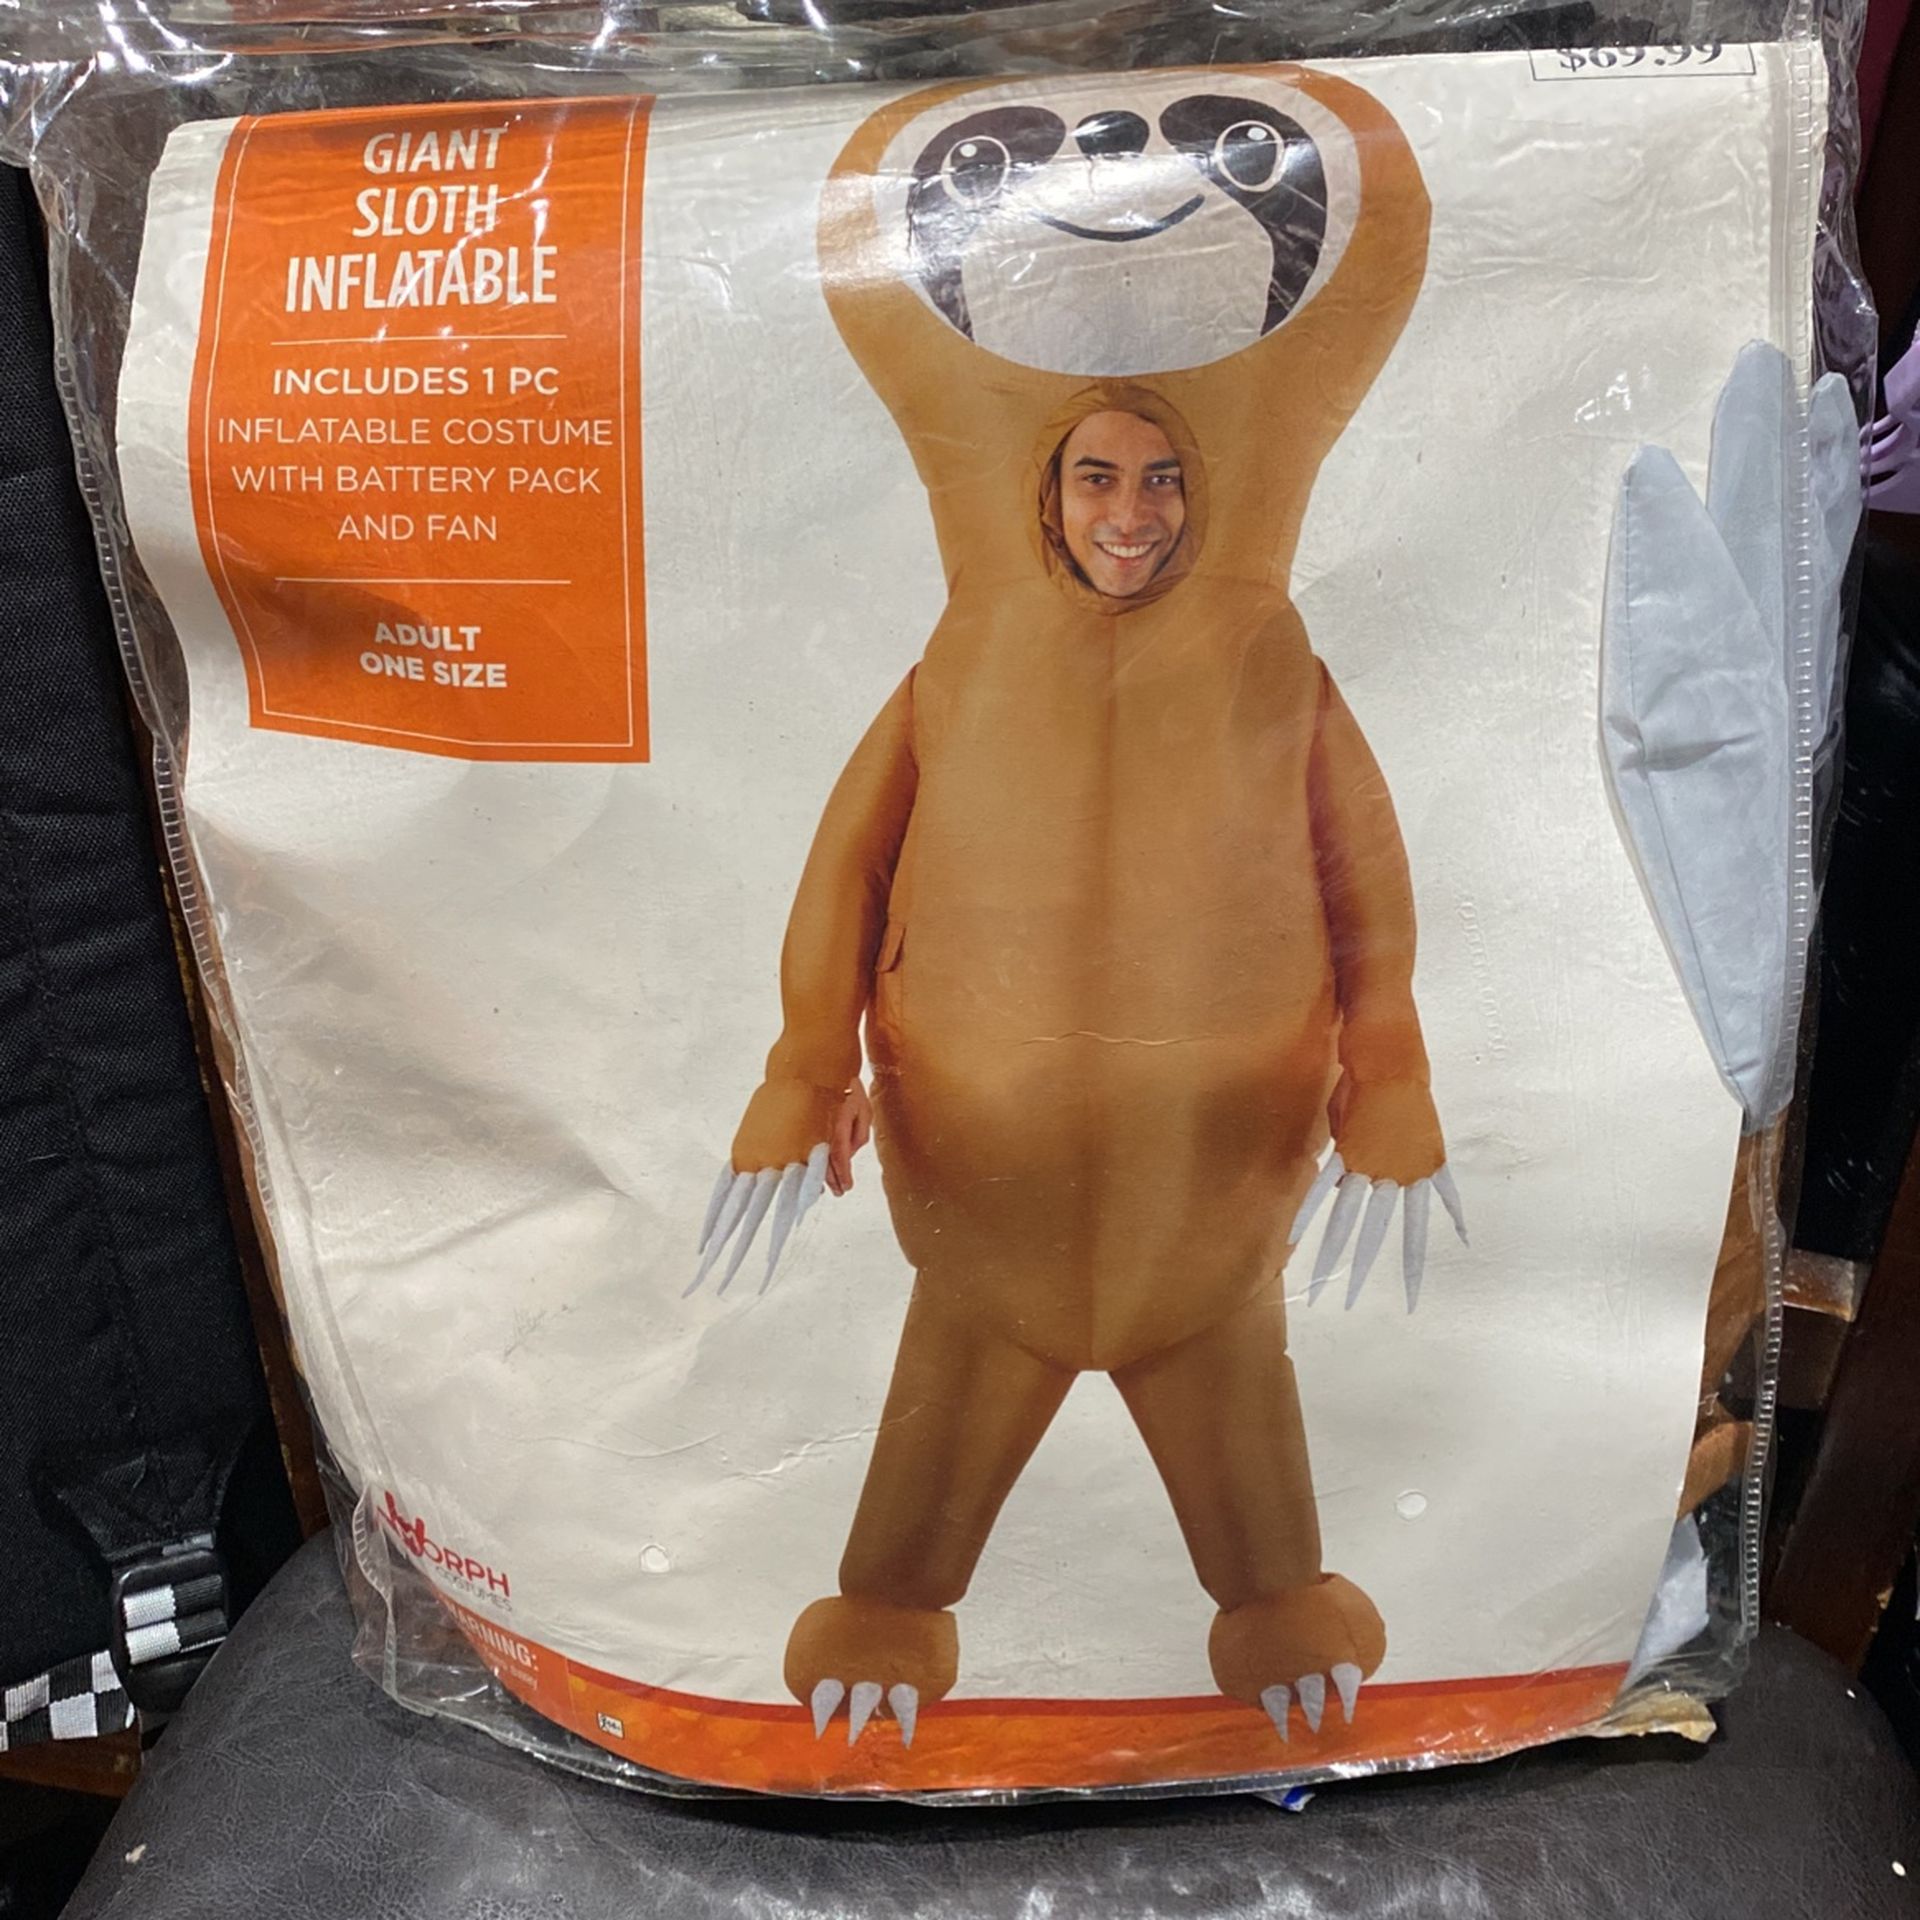 Inflatable giant sloth costume